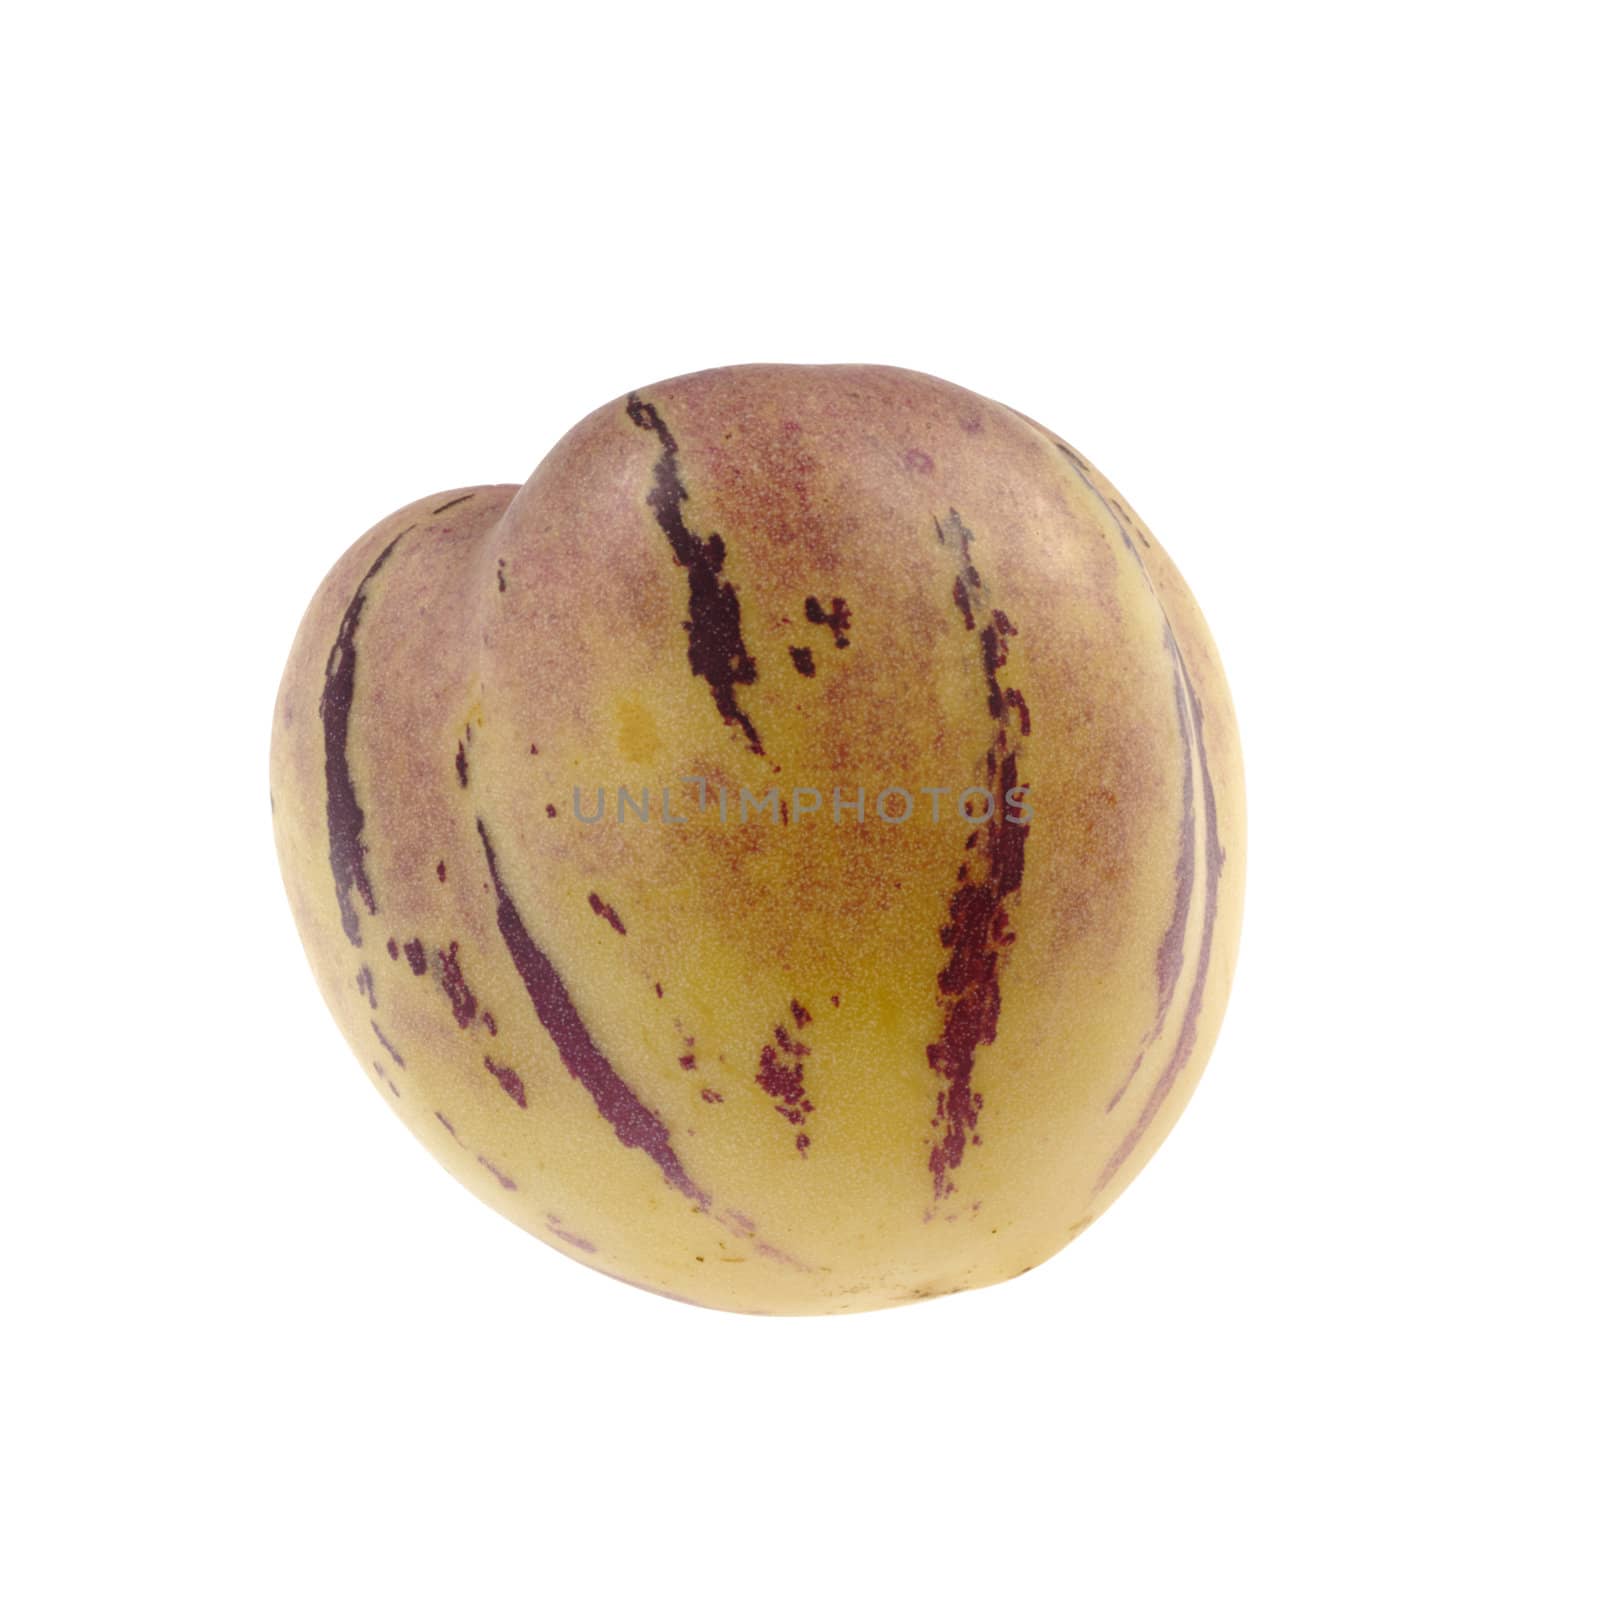 Sweet pepino (lat. Solanum Muricatum), a South American sweet but refreshing cucumber-like fruit, studio isolated on white 